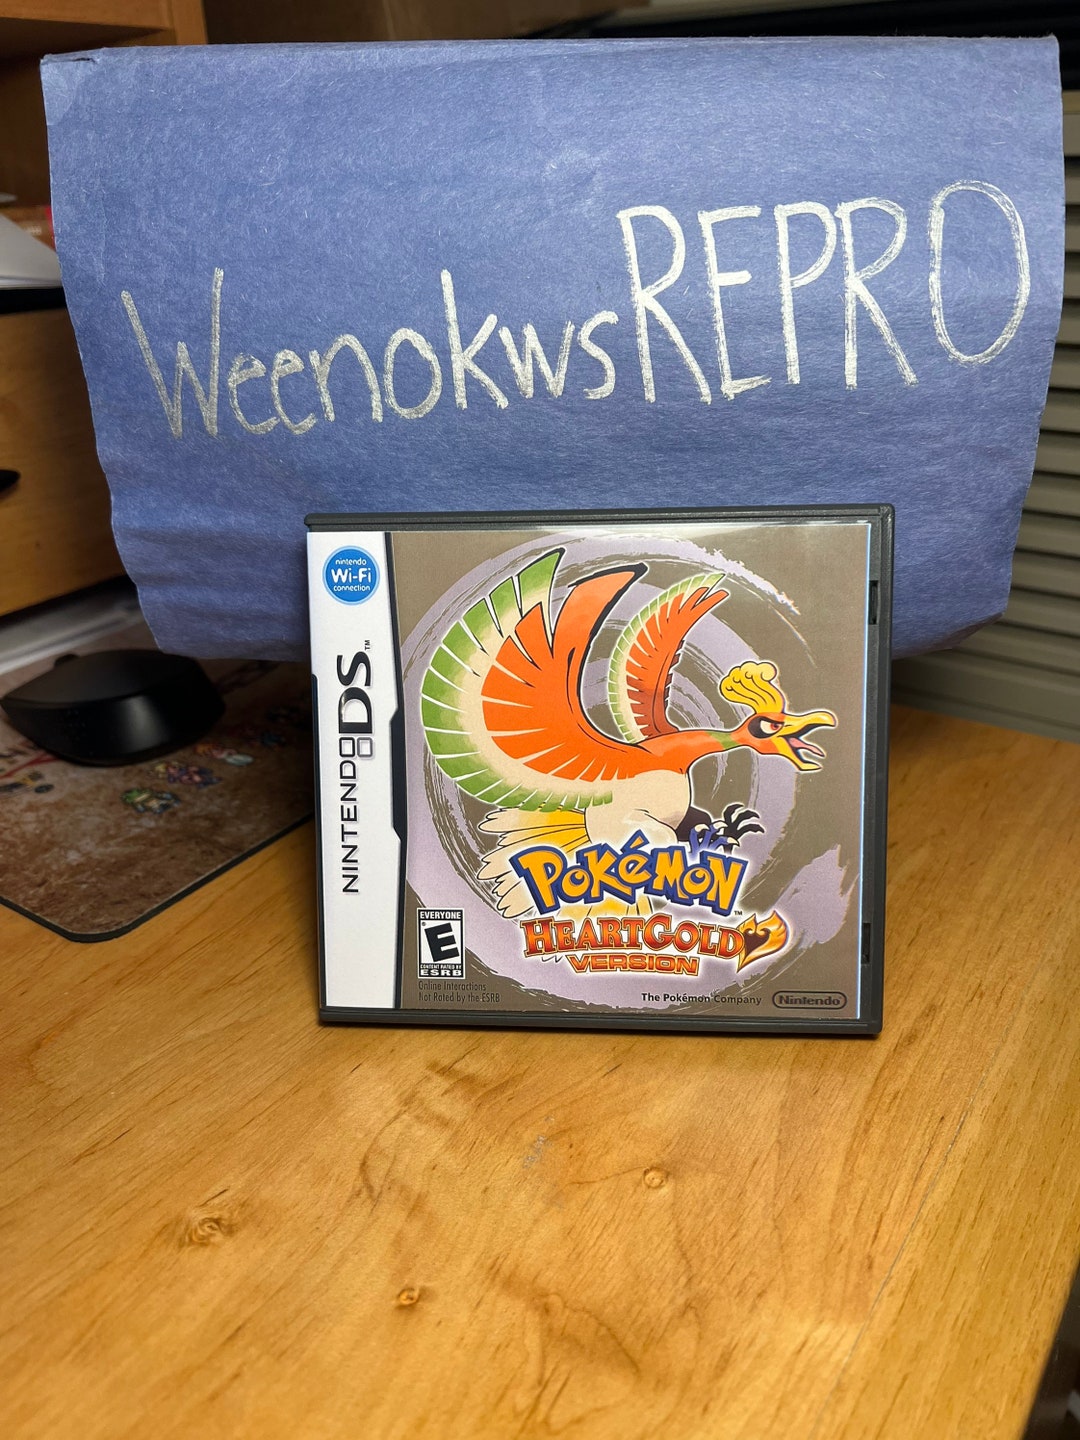 Pokémon Pokemon Heartgold Version REPRODUCTION CASE No Game